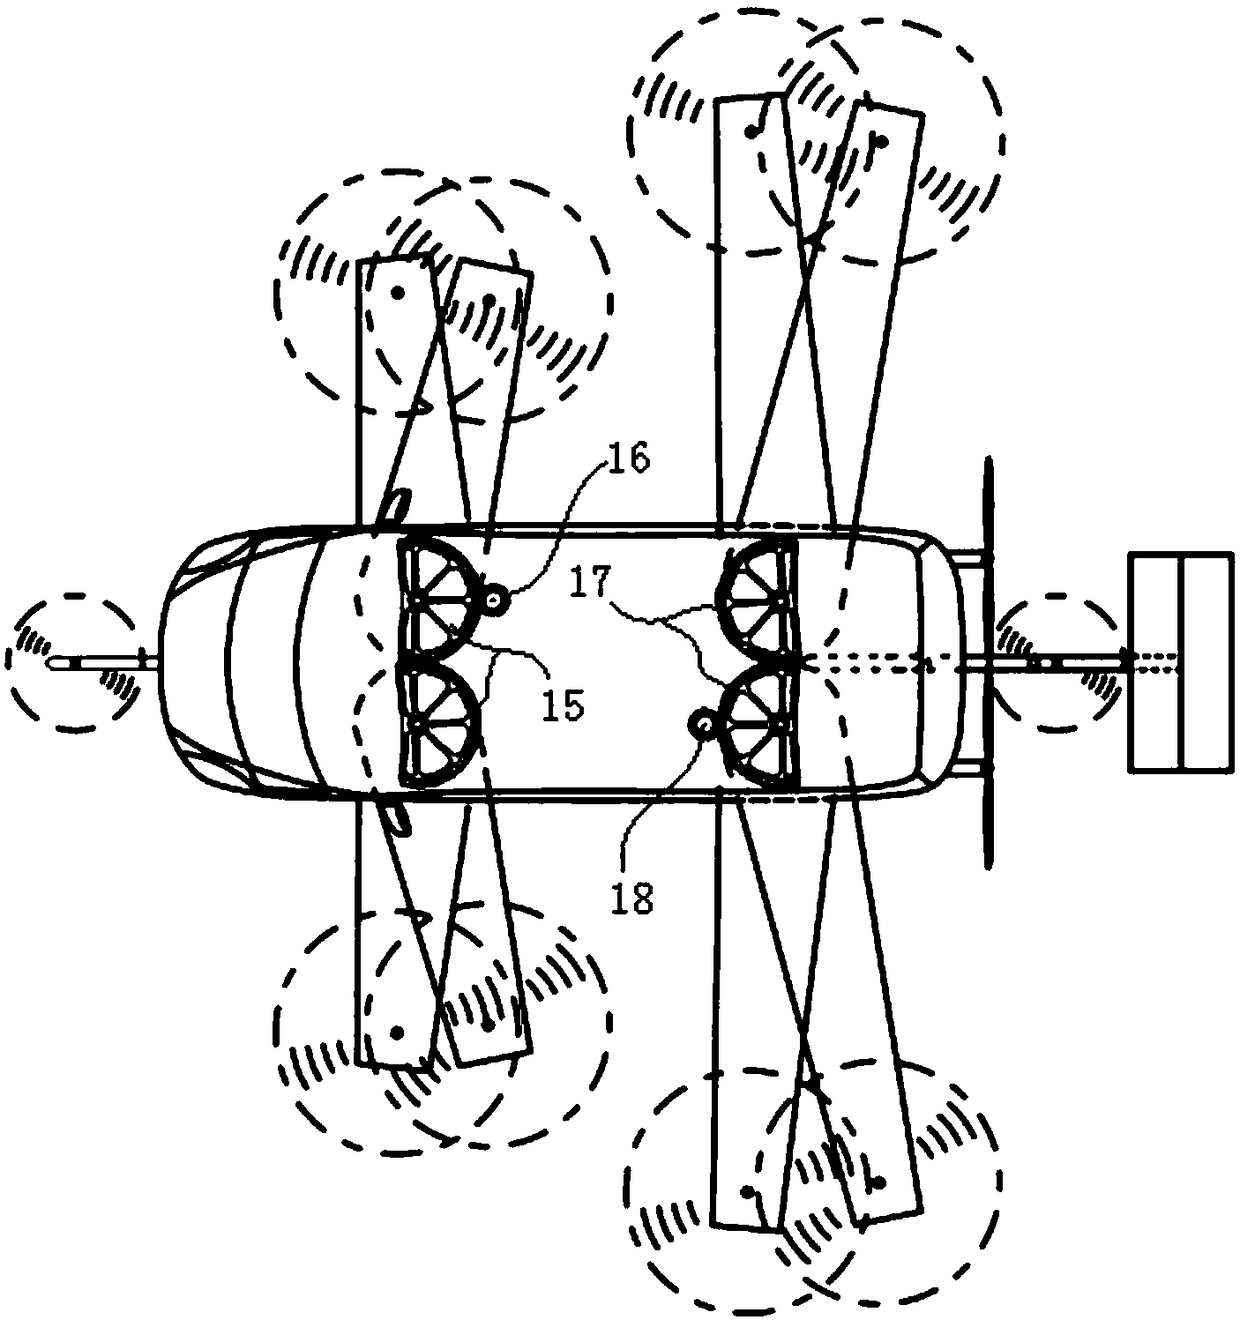 Aerocar telescopic empennage mechanism and aerocar